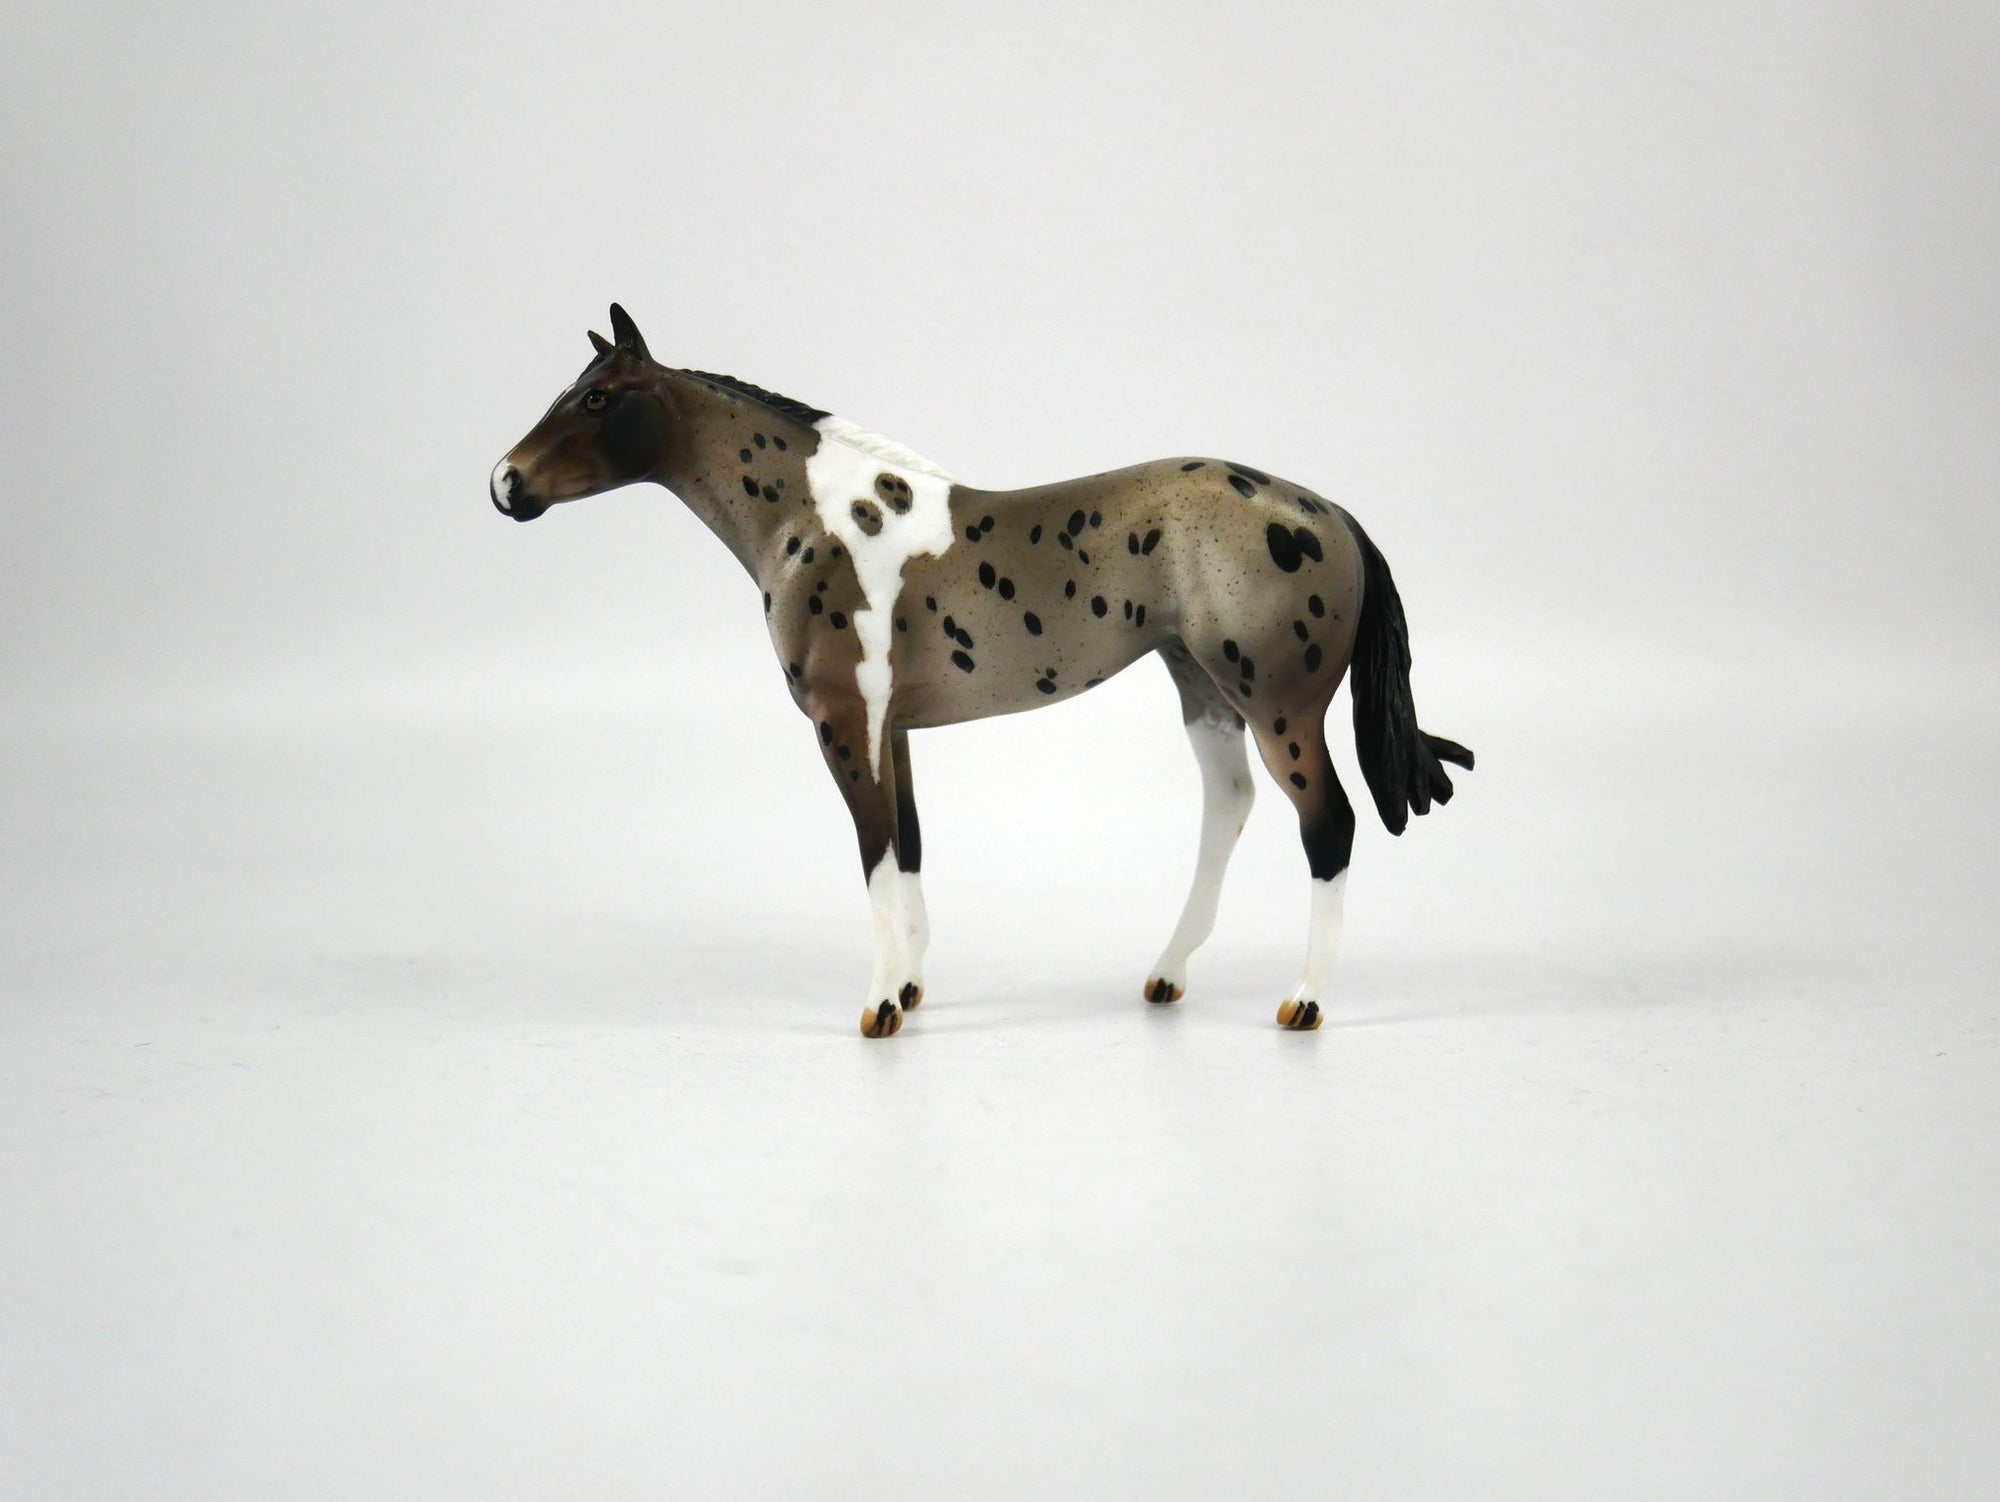 I Spot You-LE-?  Silver Tier Loyalty Blue Roan Pintaloosa Stock Horse Chip By Julie Keim 1/7/21